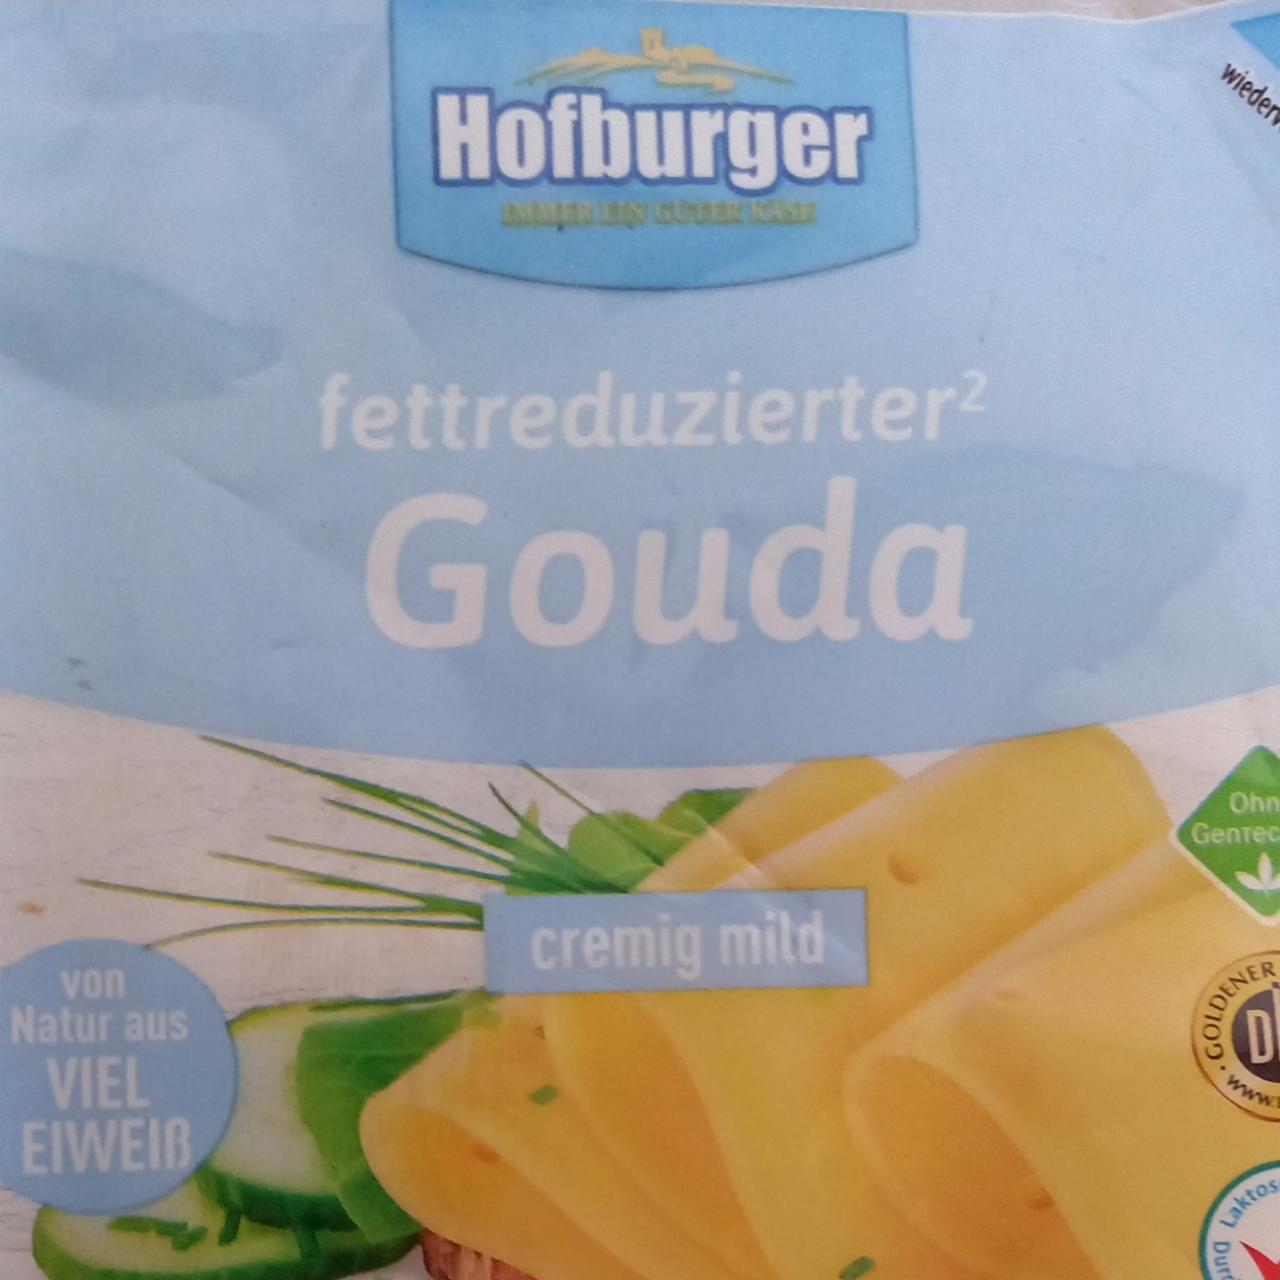 Фото - сыр Гауда 30% Hofburger